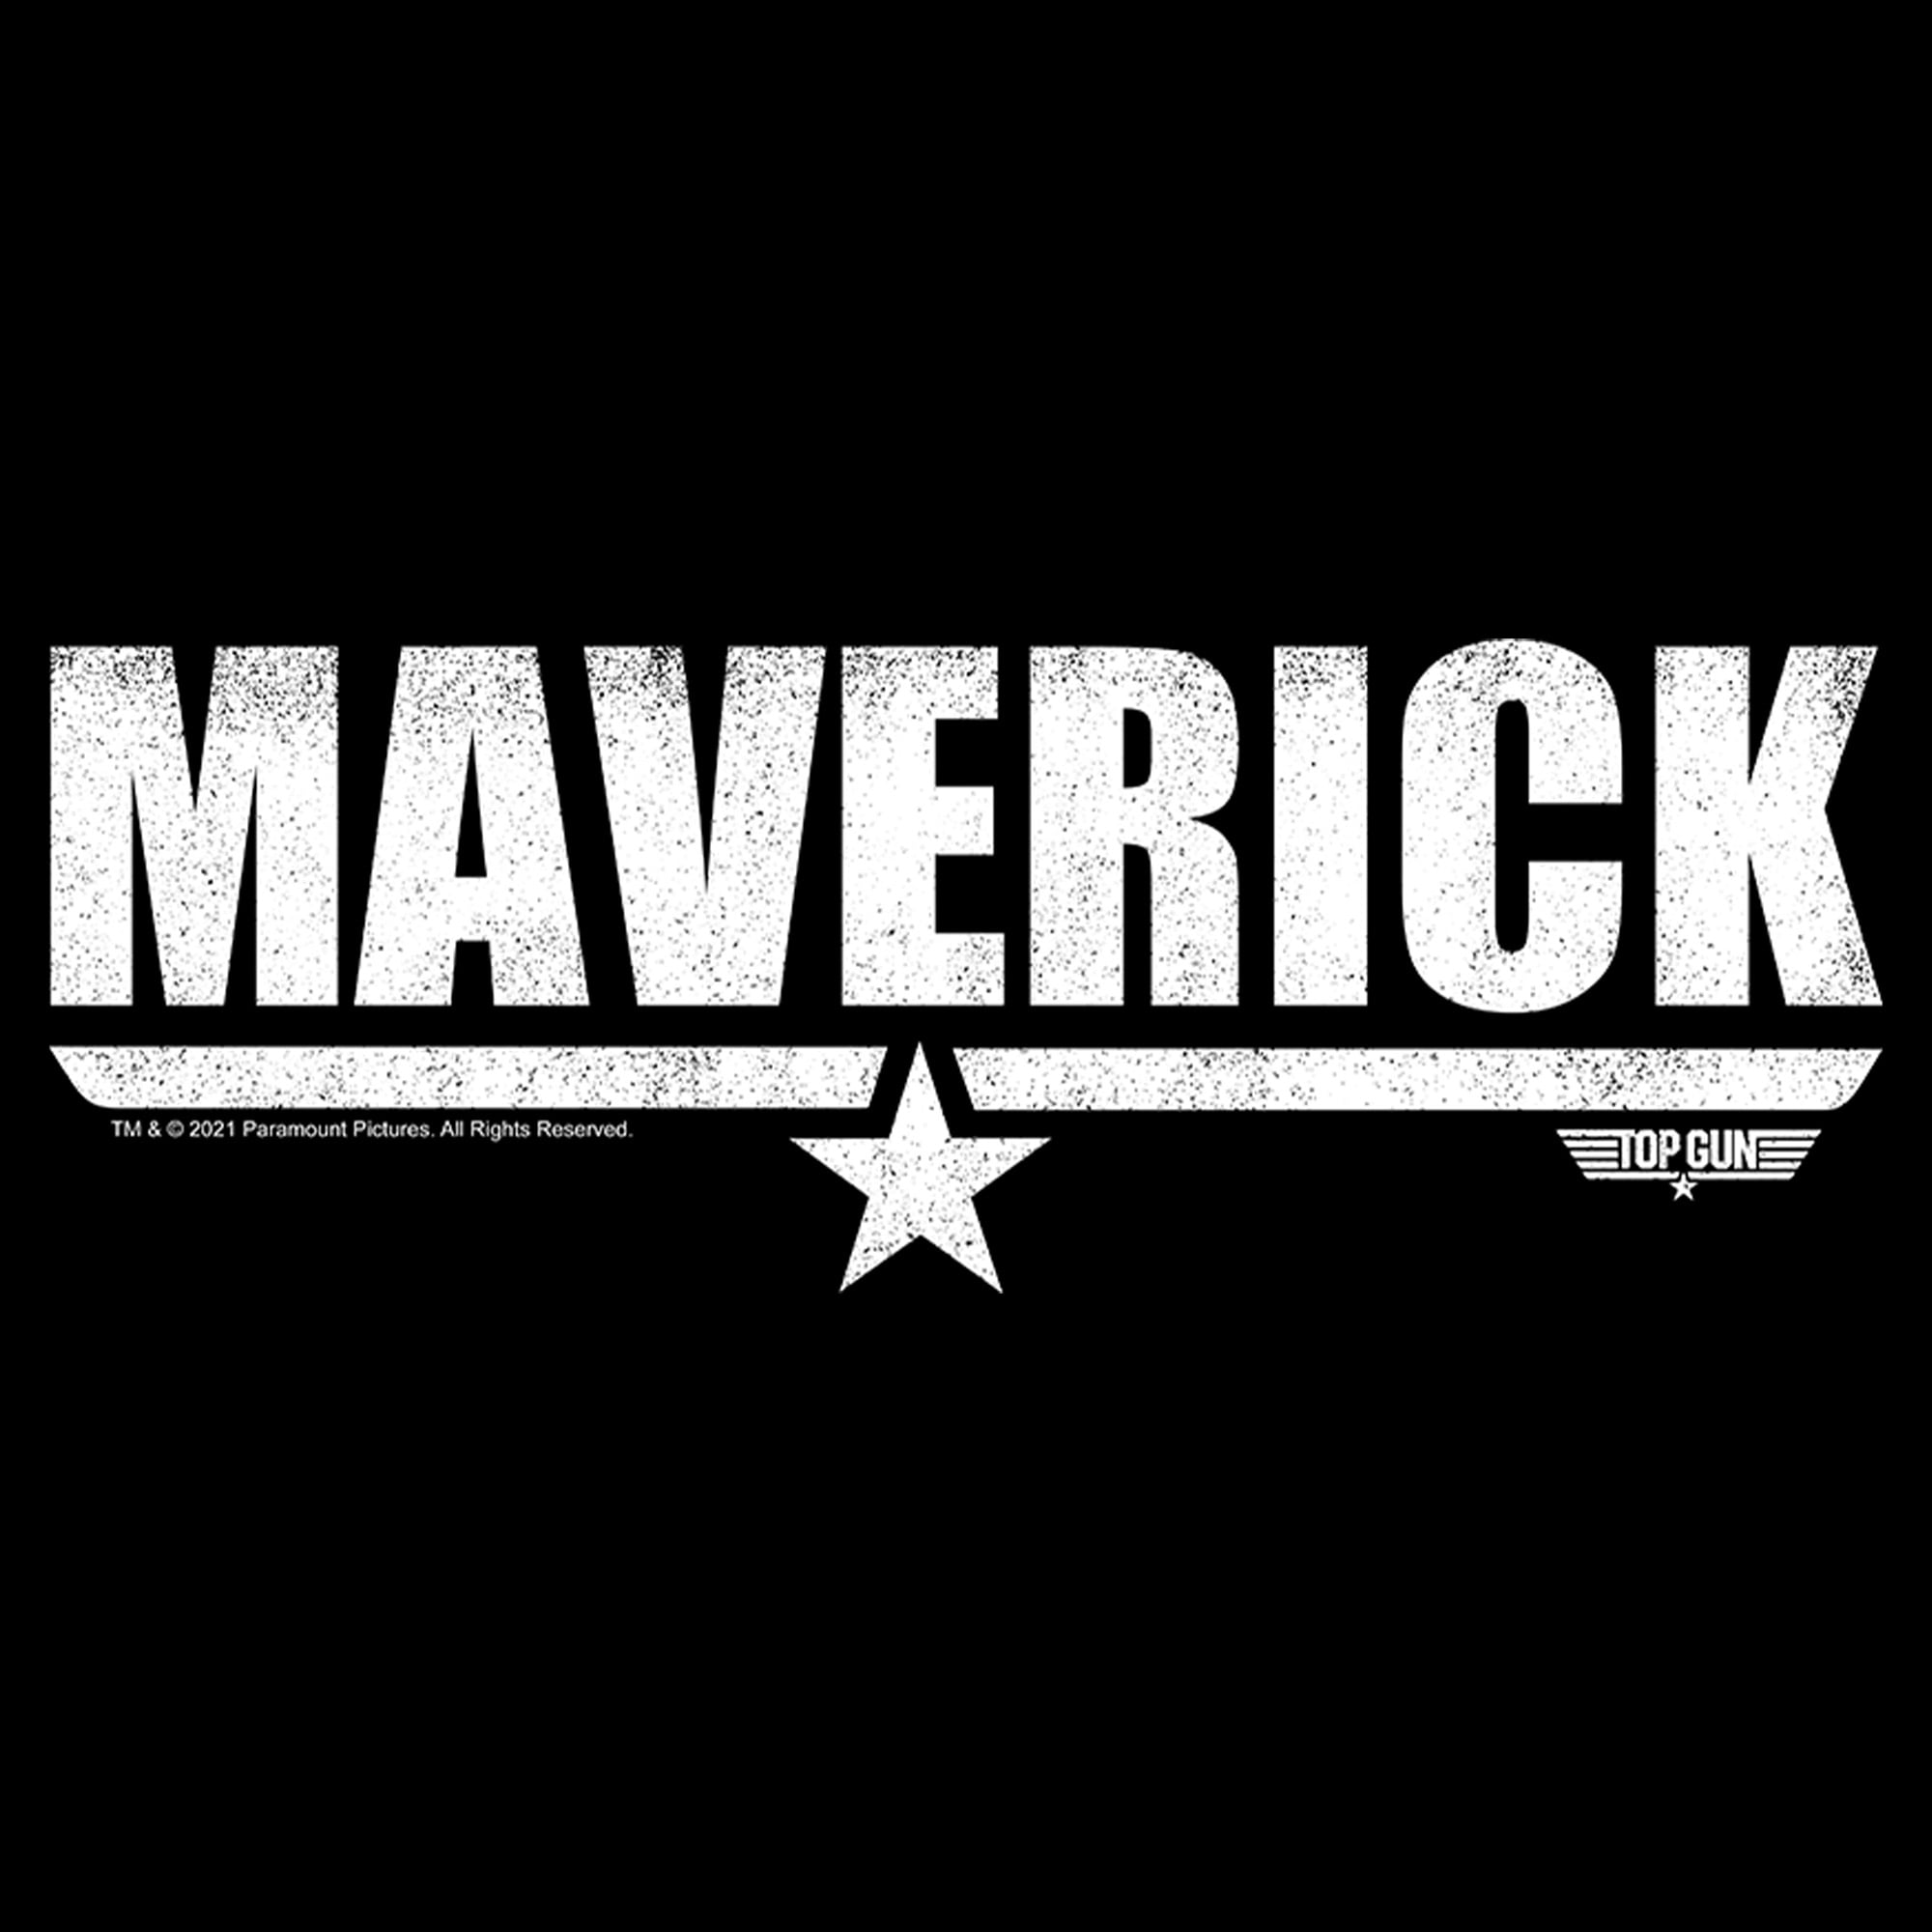 File:Top Gun Maverick logo.png - Wikimedia Commons